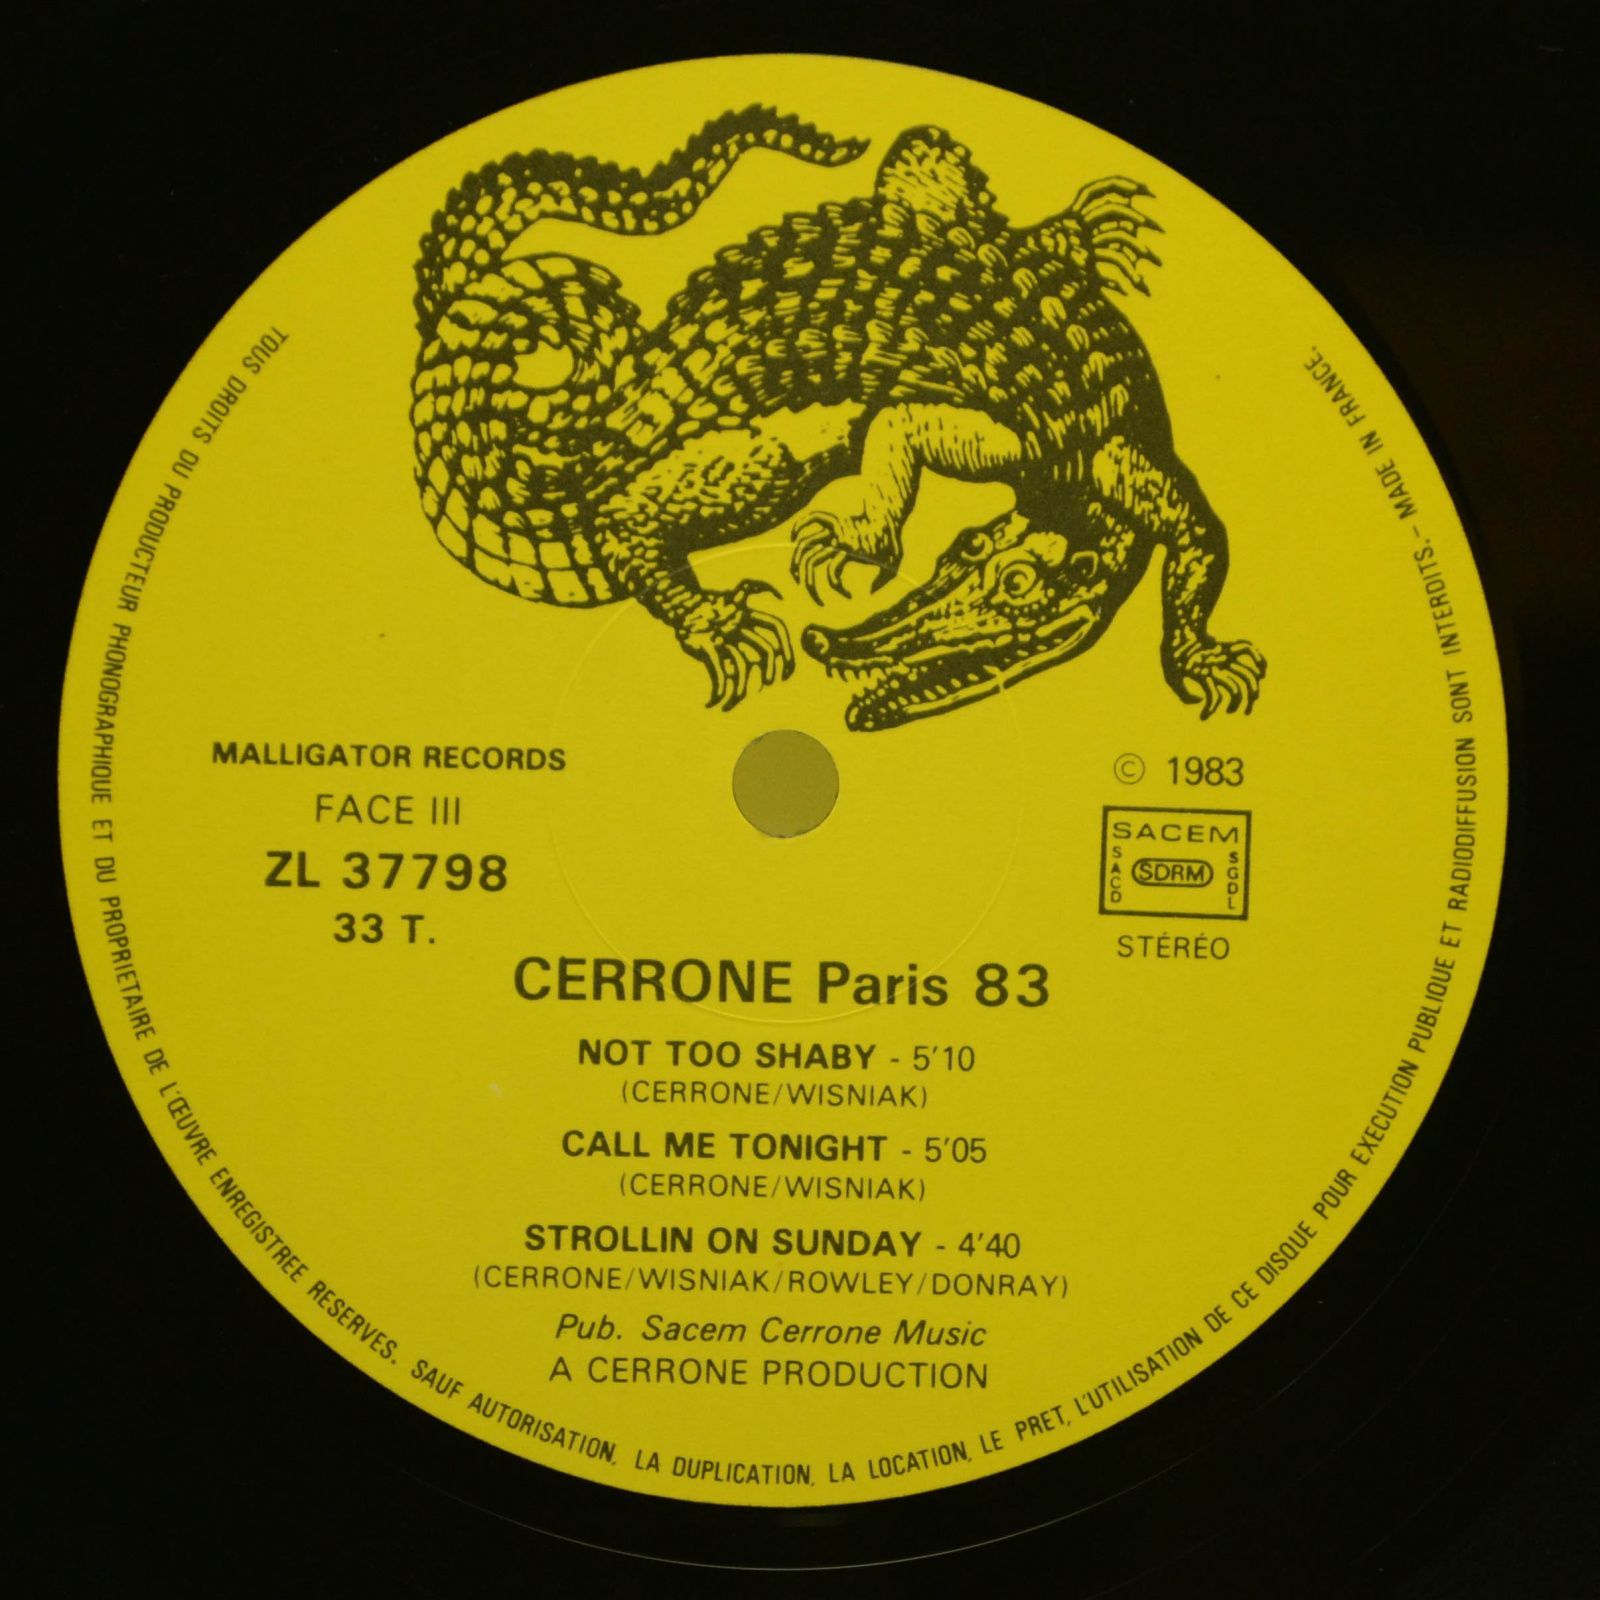 Cerrone — En Concert (2LP, 1-st, France), 1983